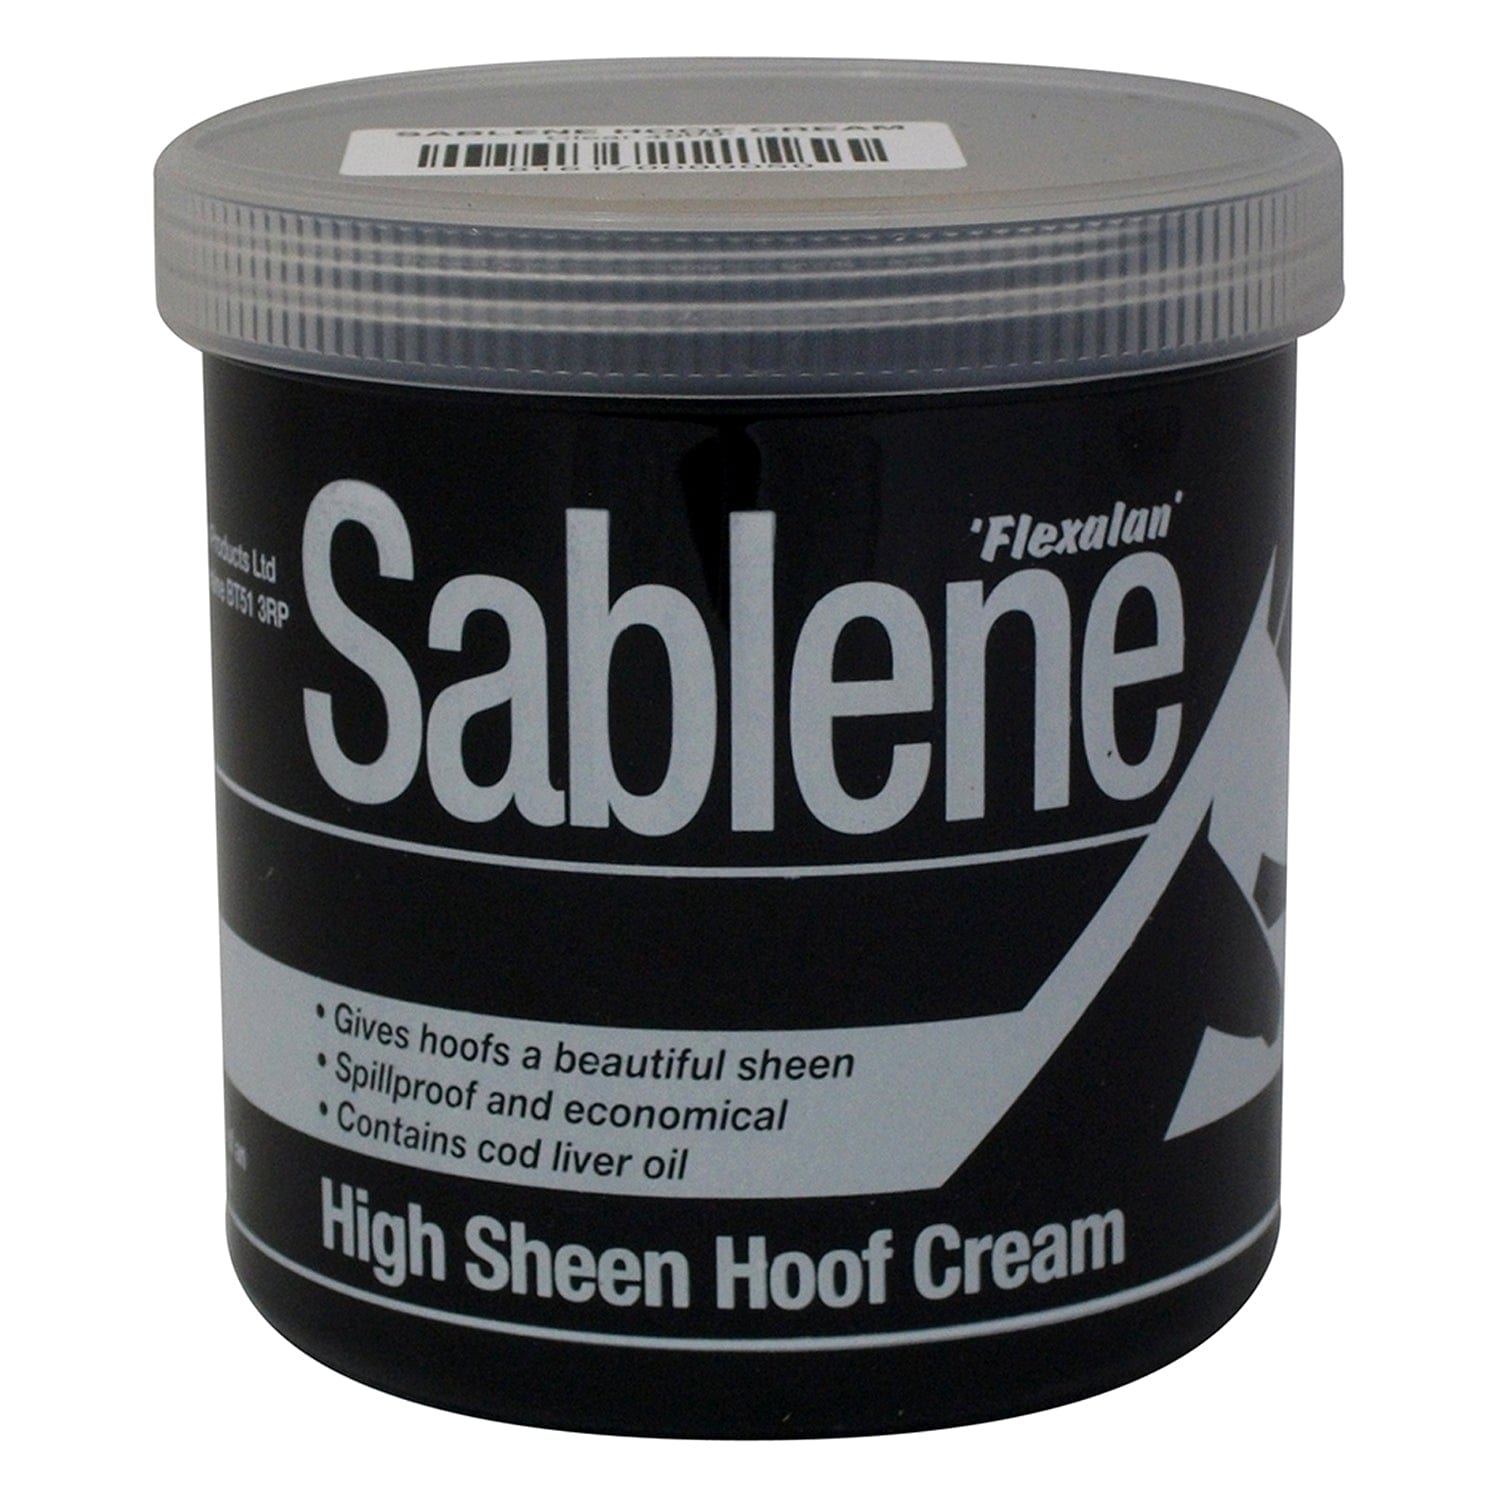 Flexalan sablene hoof cream